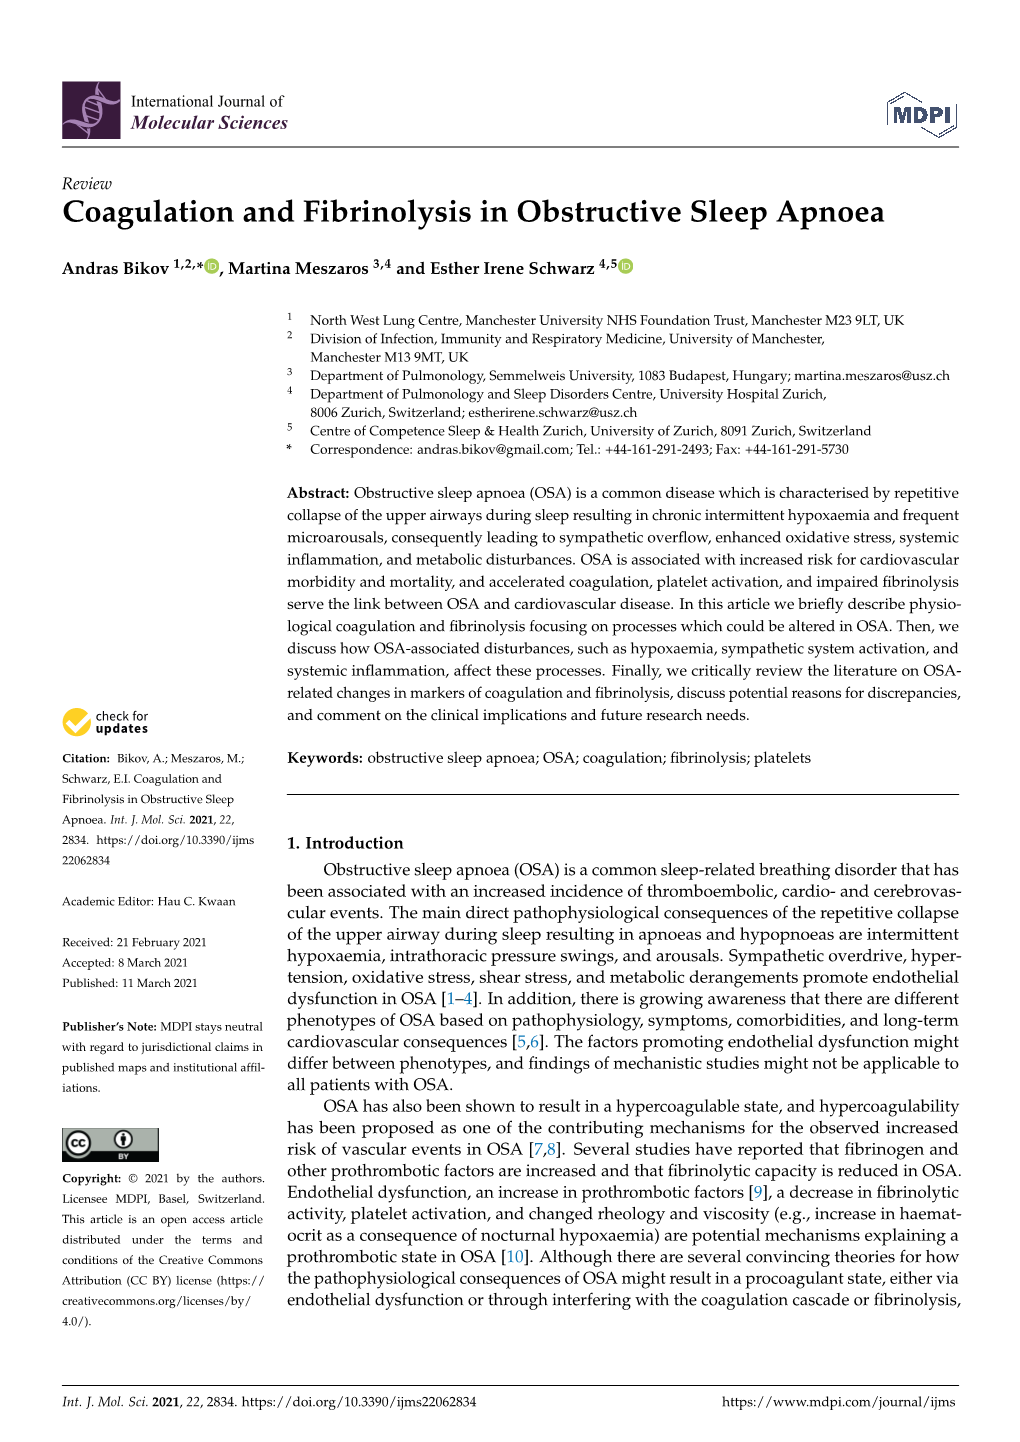 Coagulation and Fibrinolysis in Obstructive Sleep Apnoea